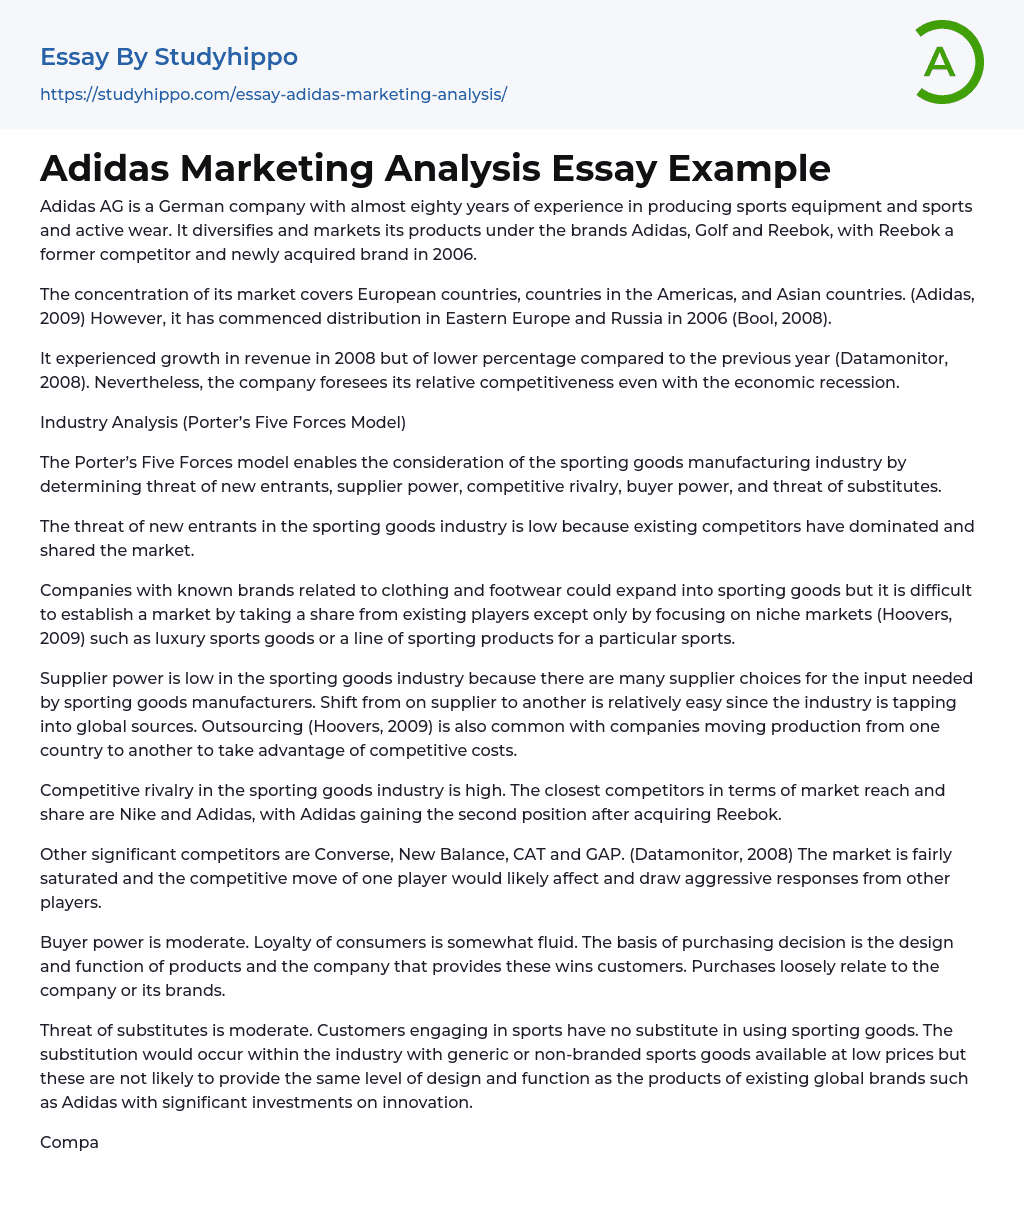 Adidas Marketing Analysis Essay Example